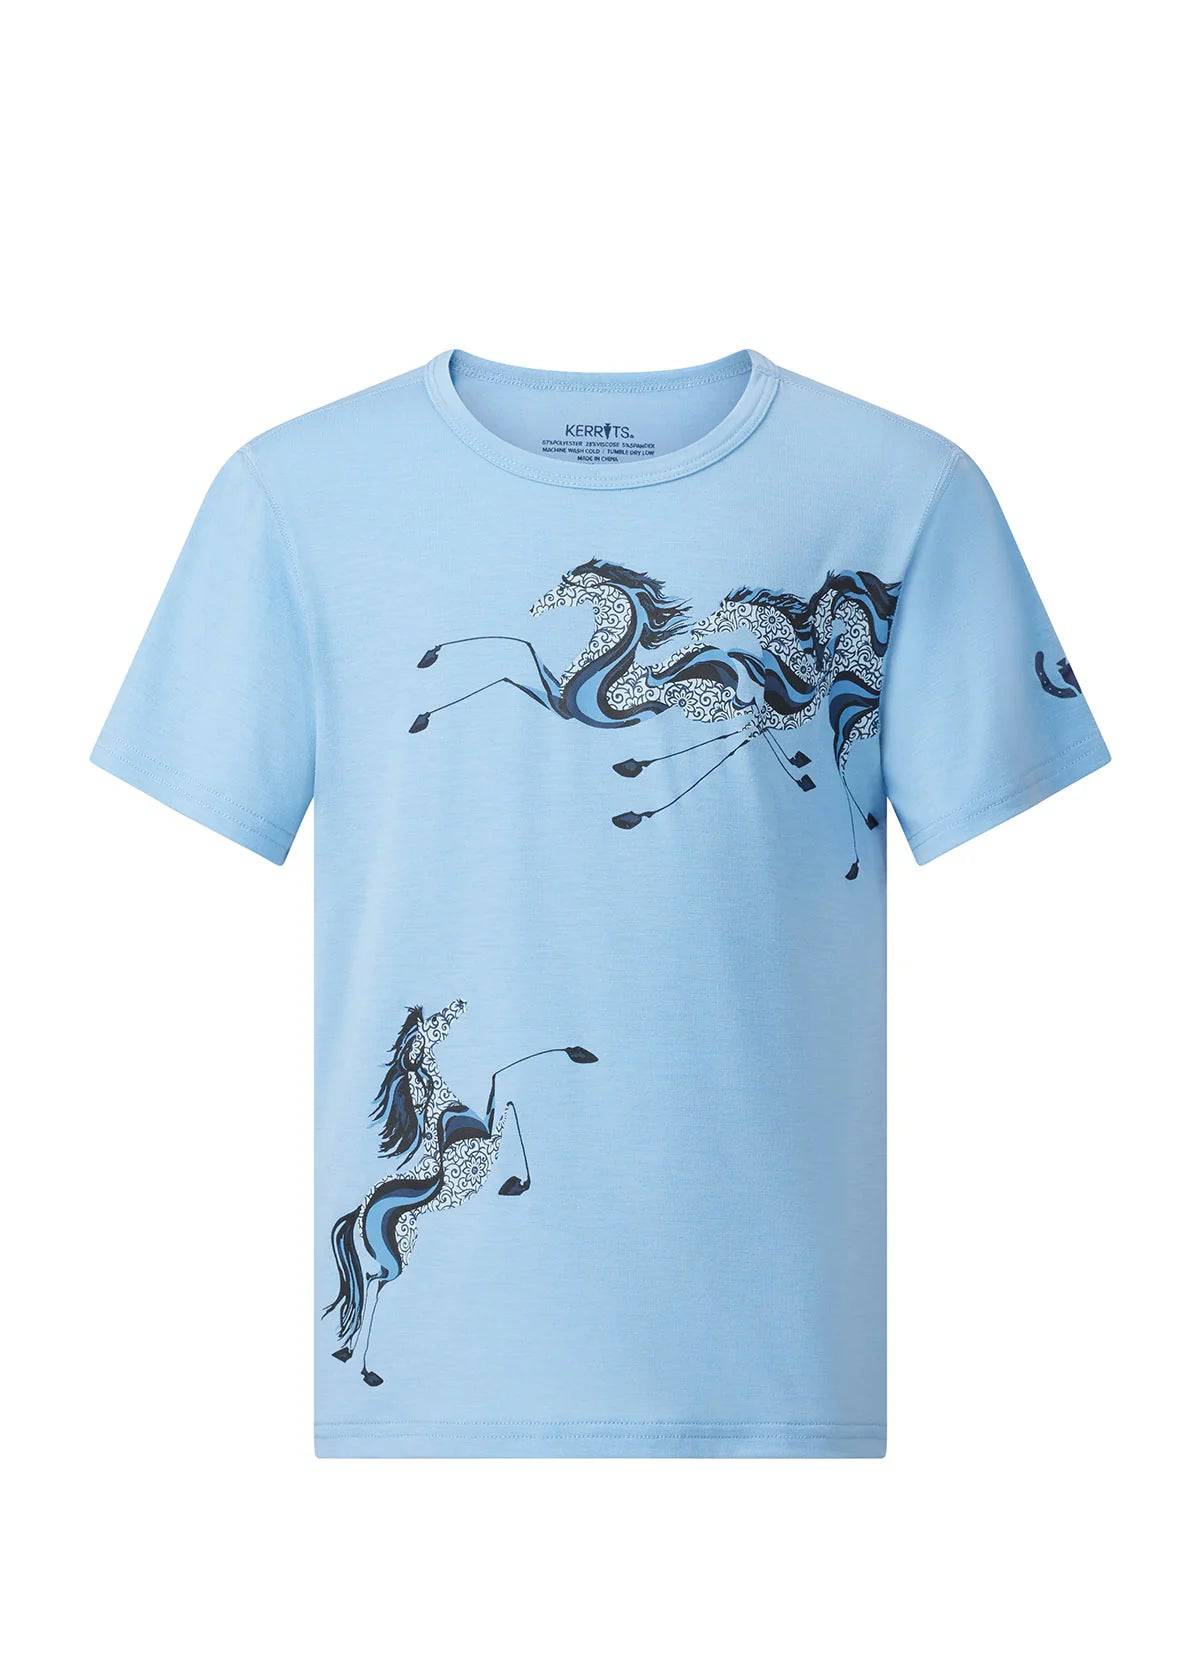 Kerrits Kids Melody Horse T-Shirt - Equine Exchange Tack Shop